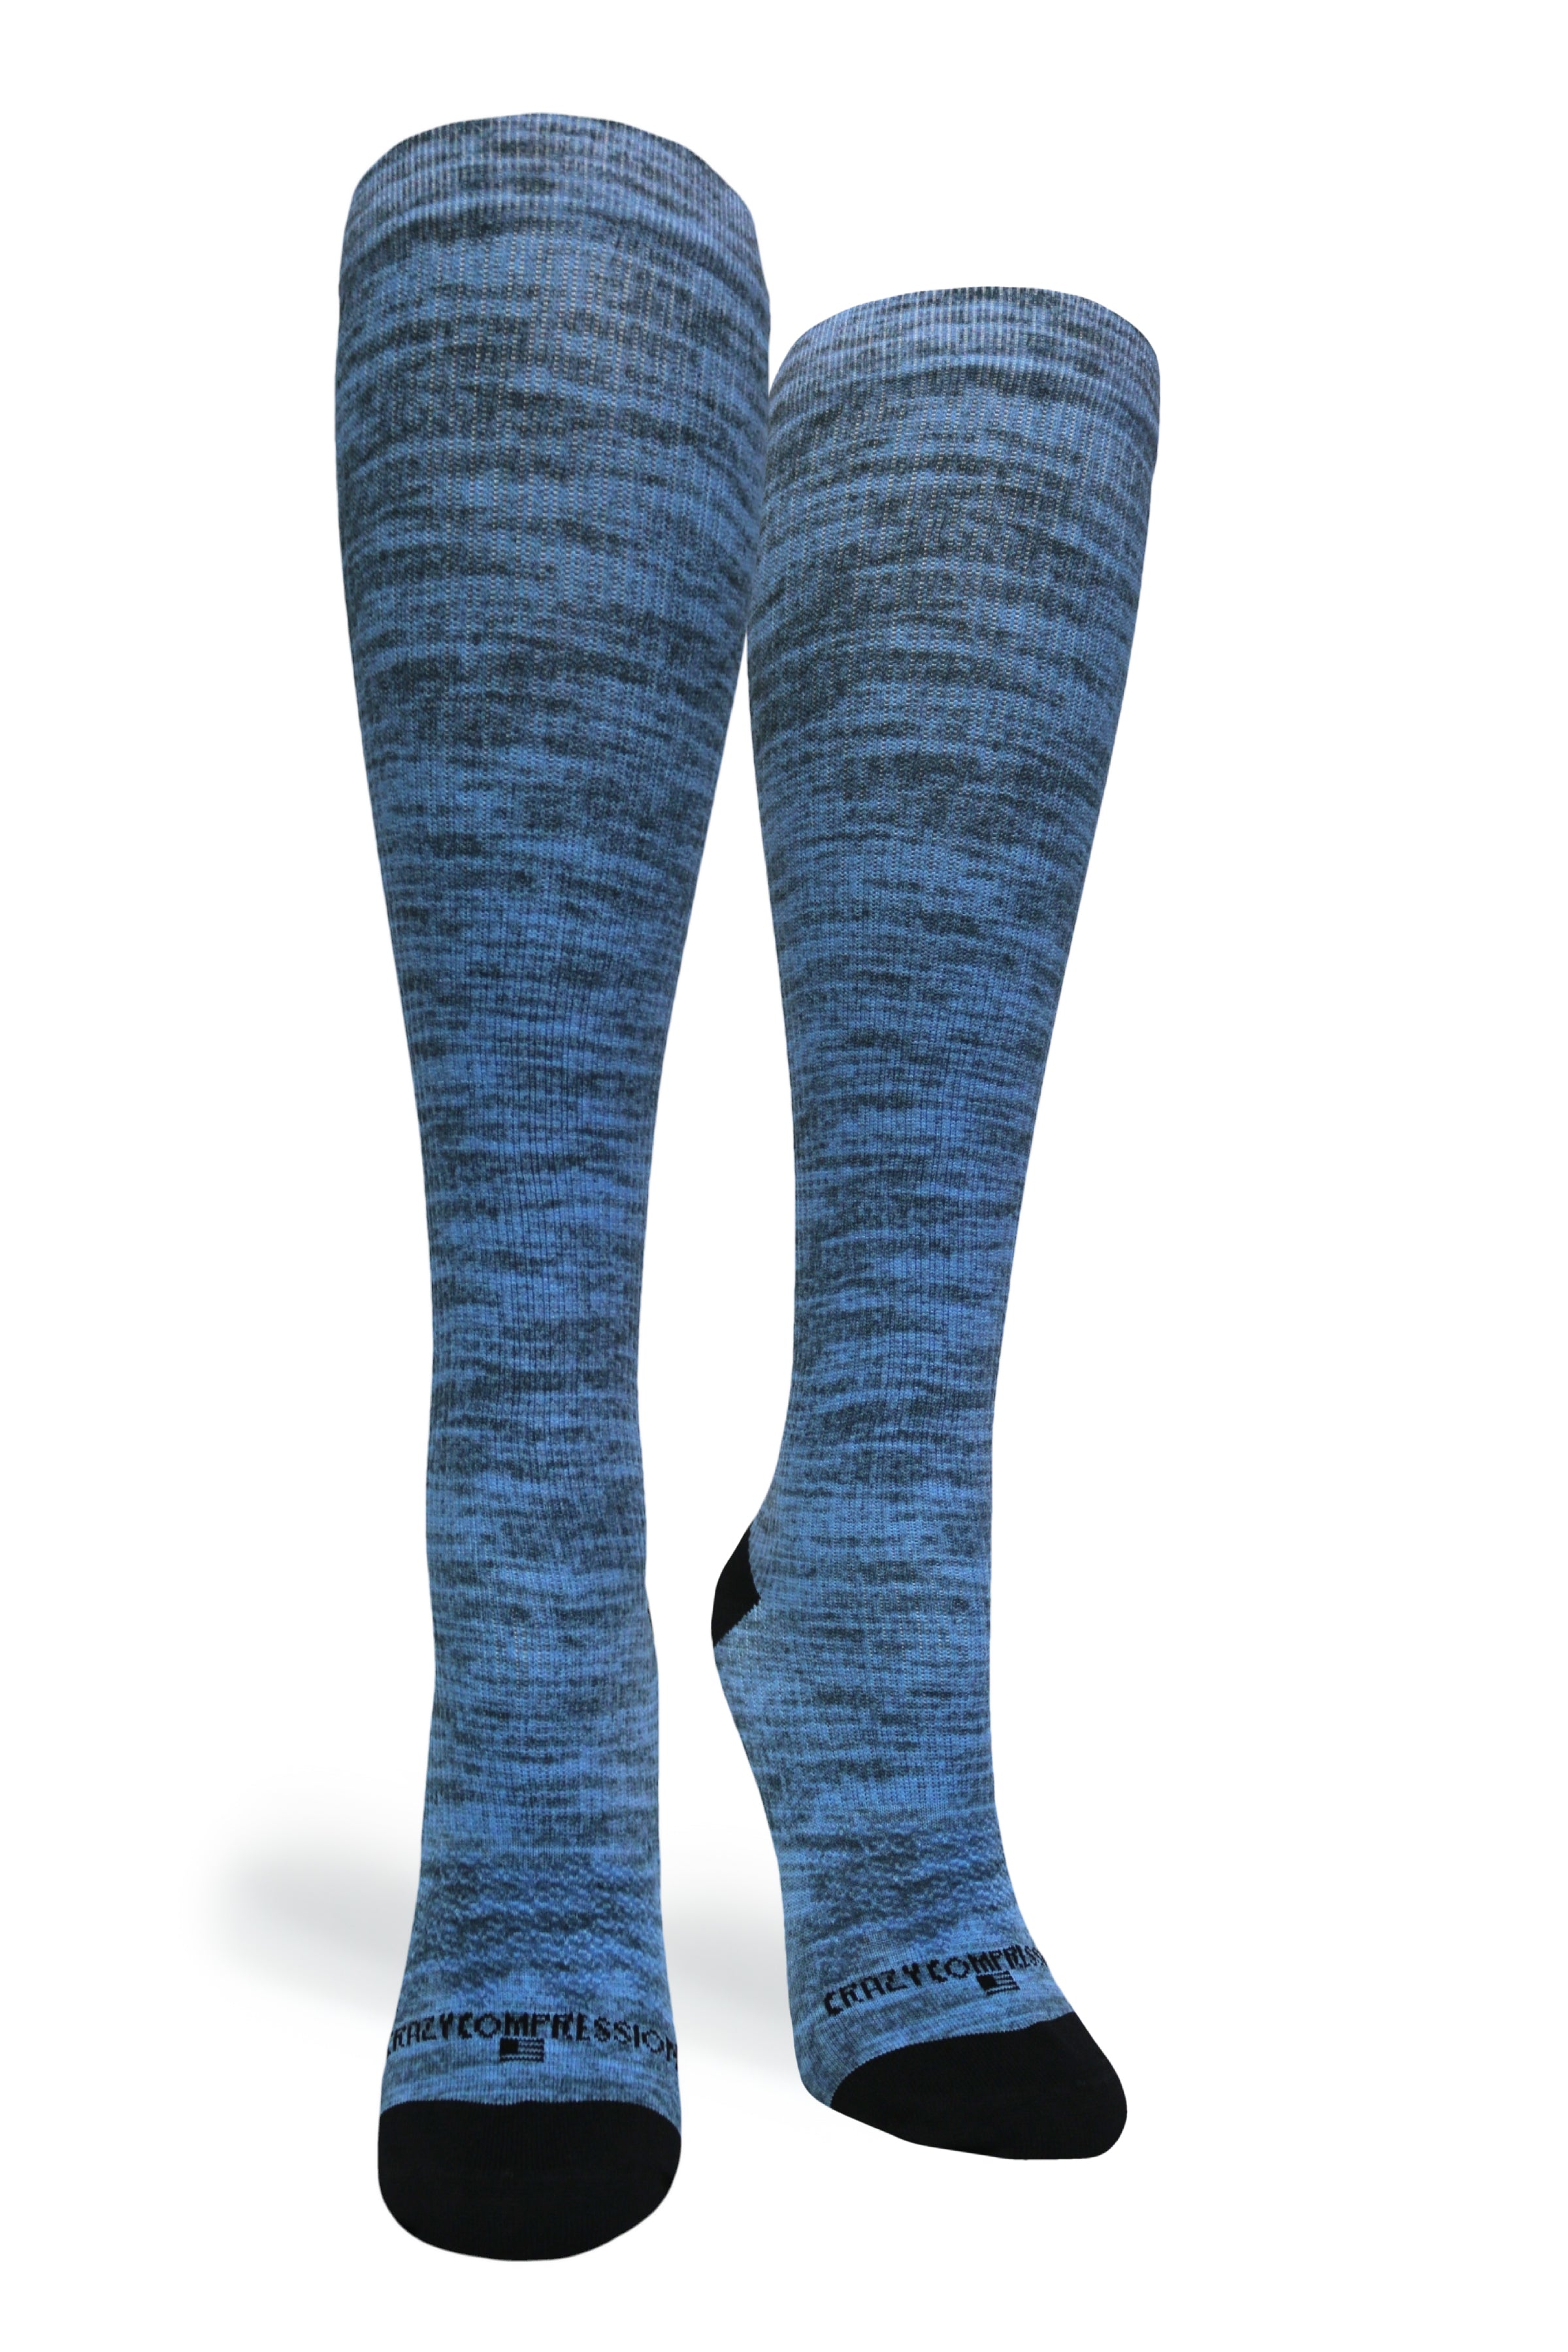 360 Men's Blue Heather OTC Compression Socks (Standard & Extra Wide)